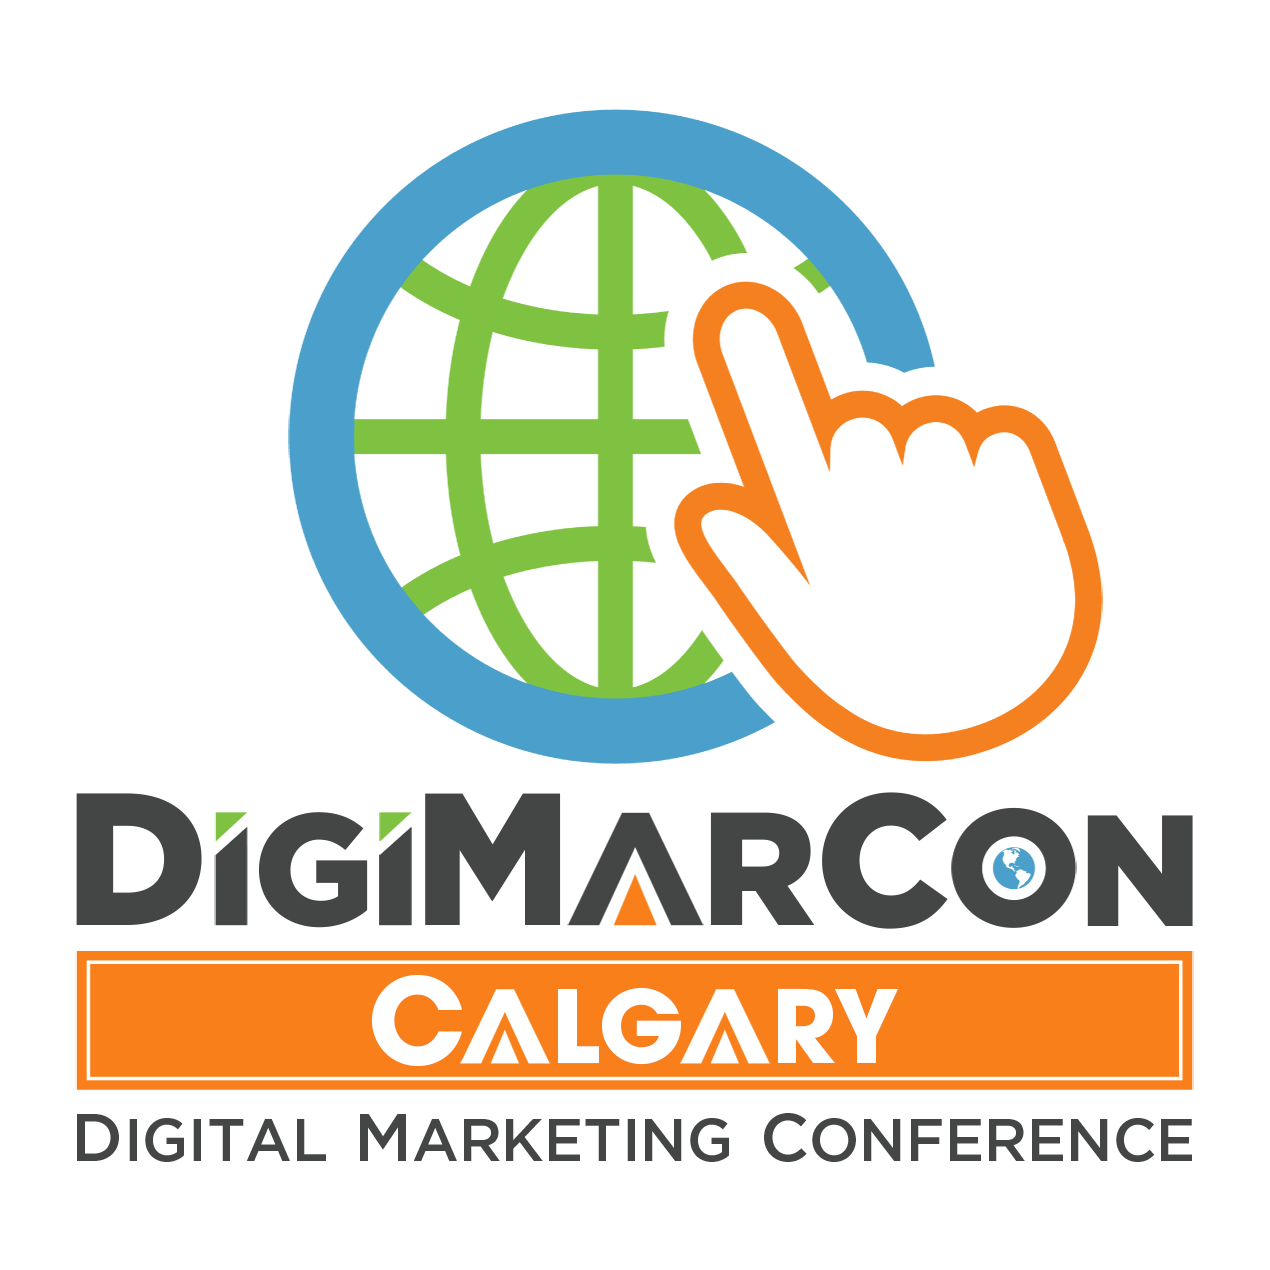 Calgary Digital Marketing, Media & Advertising Conference